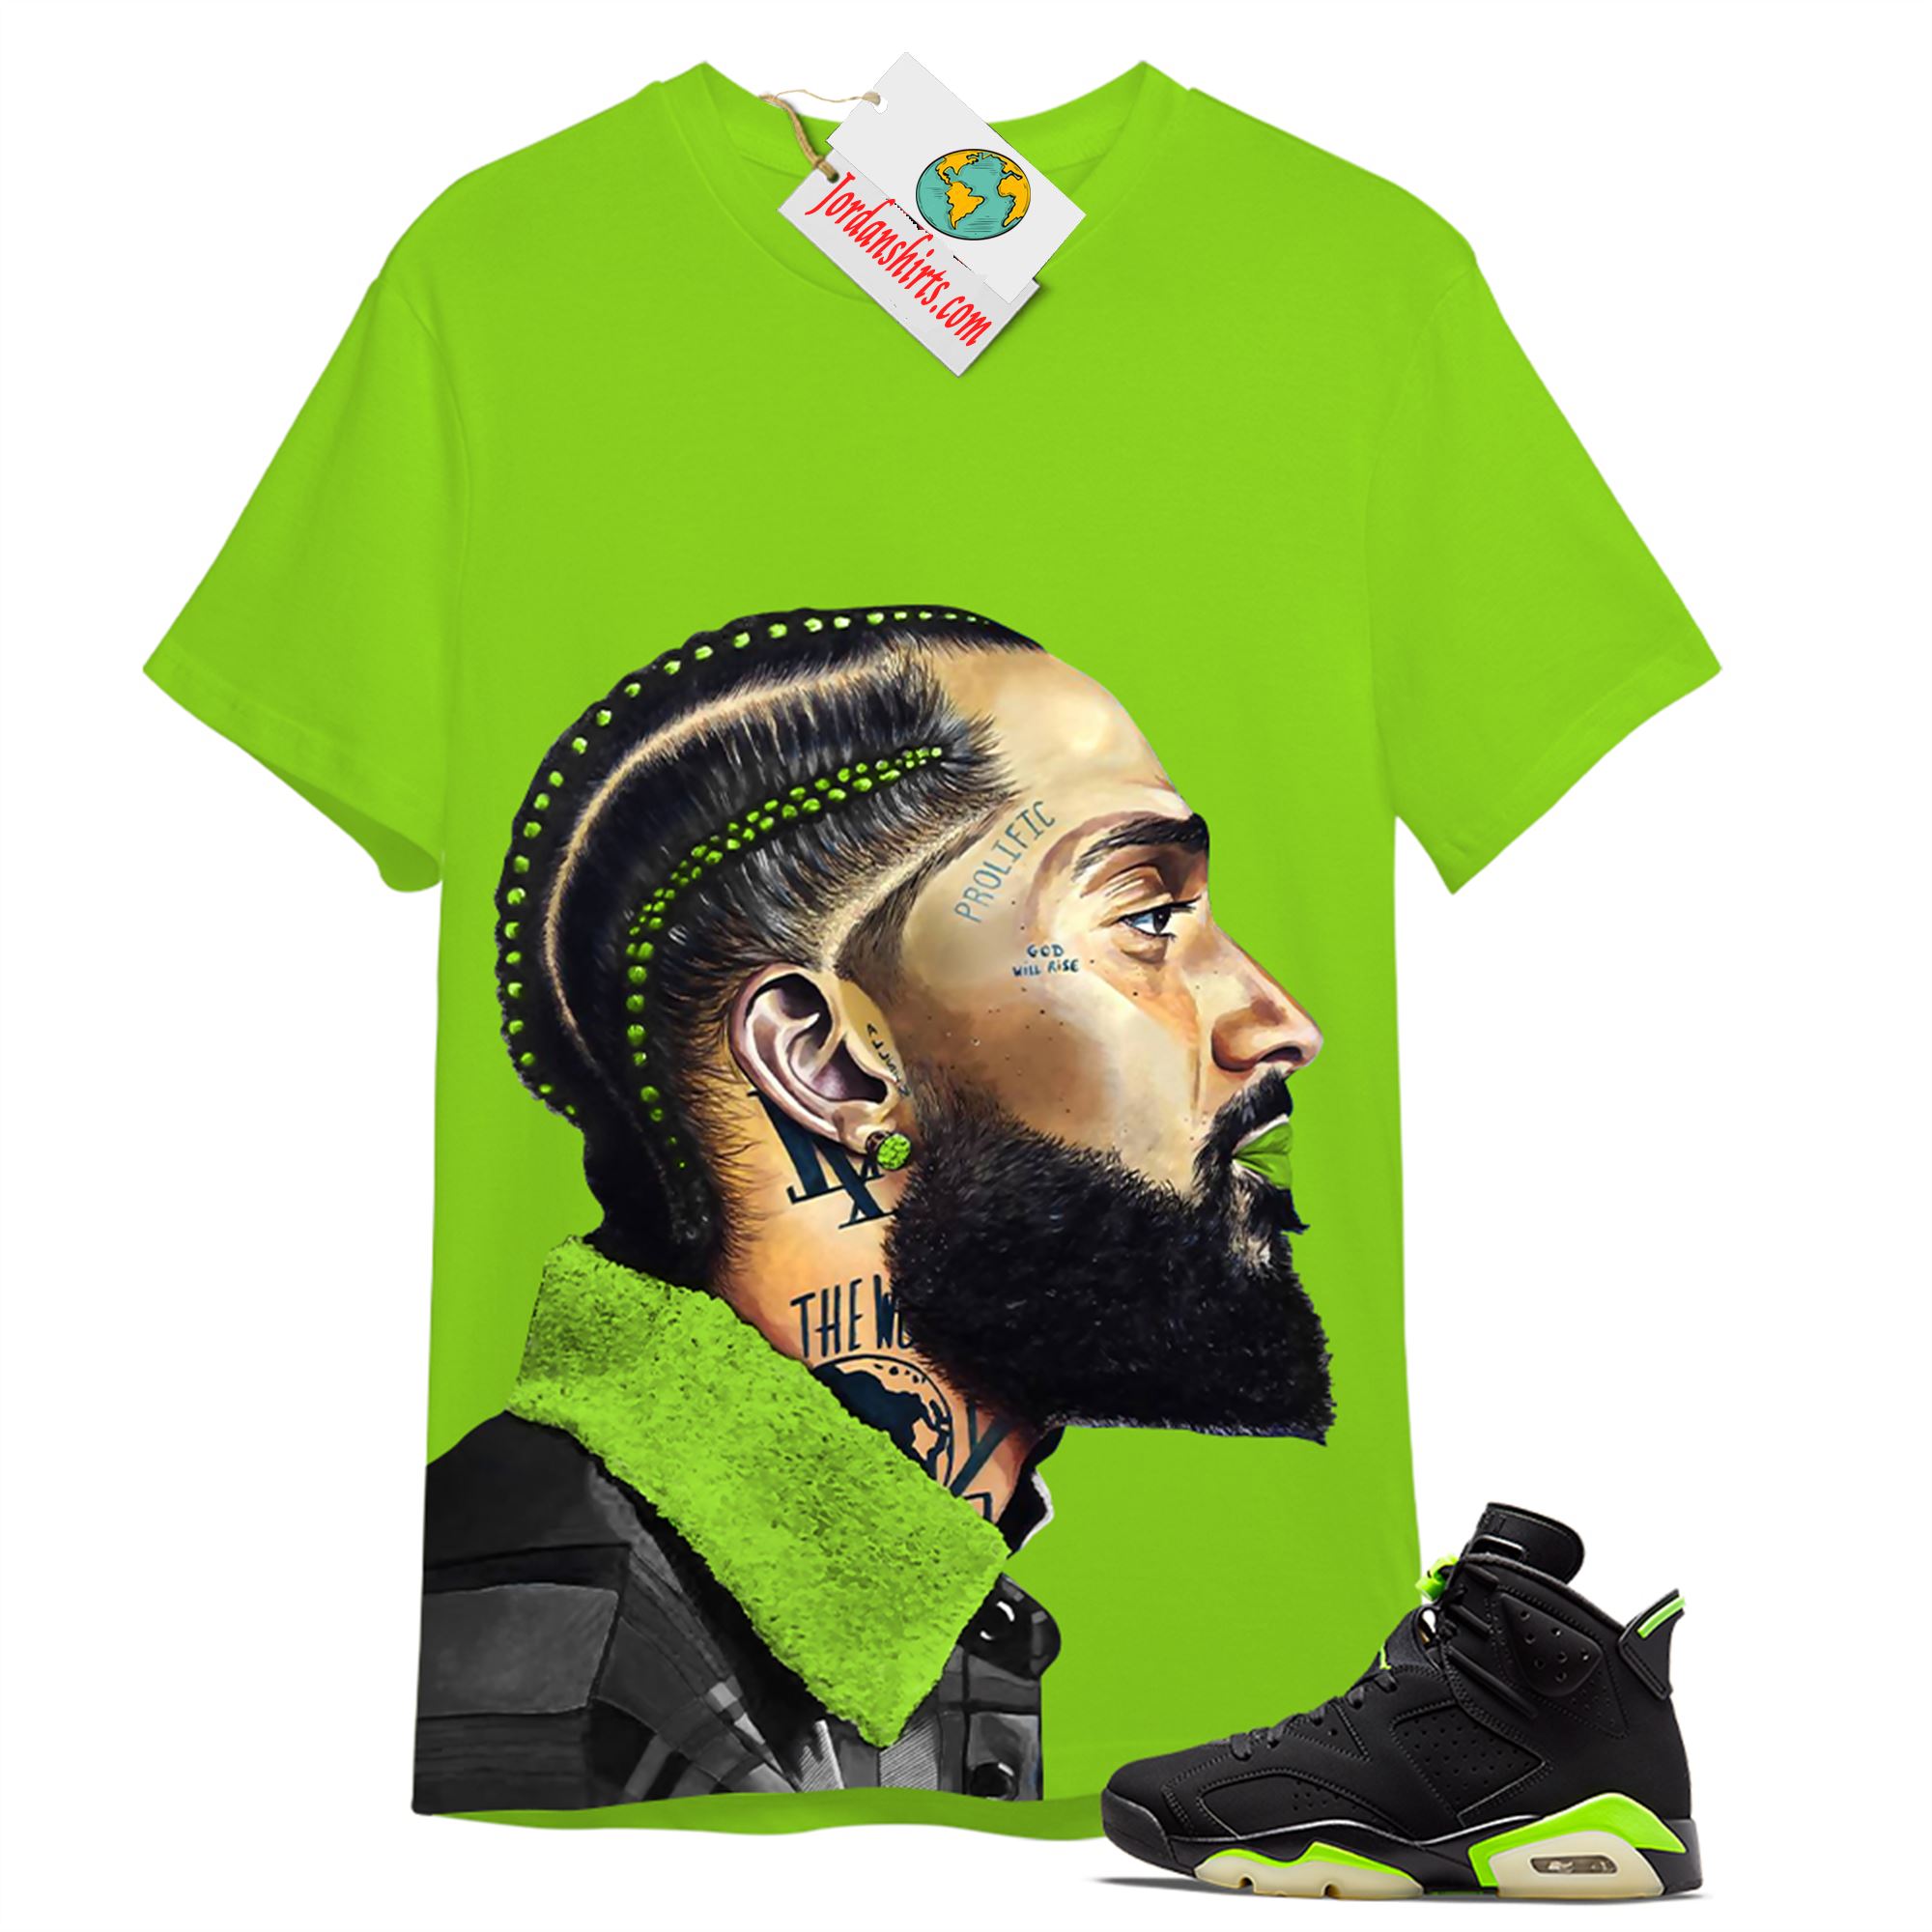 Jordan 6 Shirt, Aop Nipsey Hussle Green T-shirt Air Jordan 6 Electric Green Shirt Size Up To 5xl